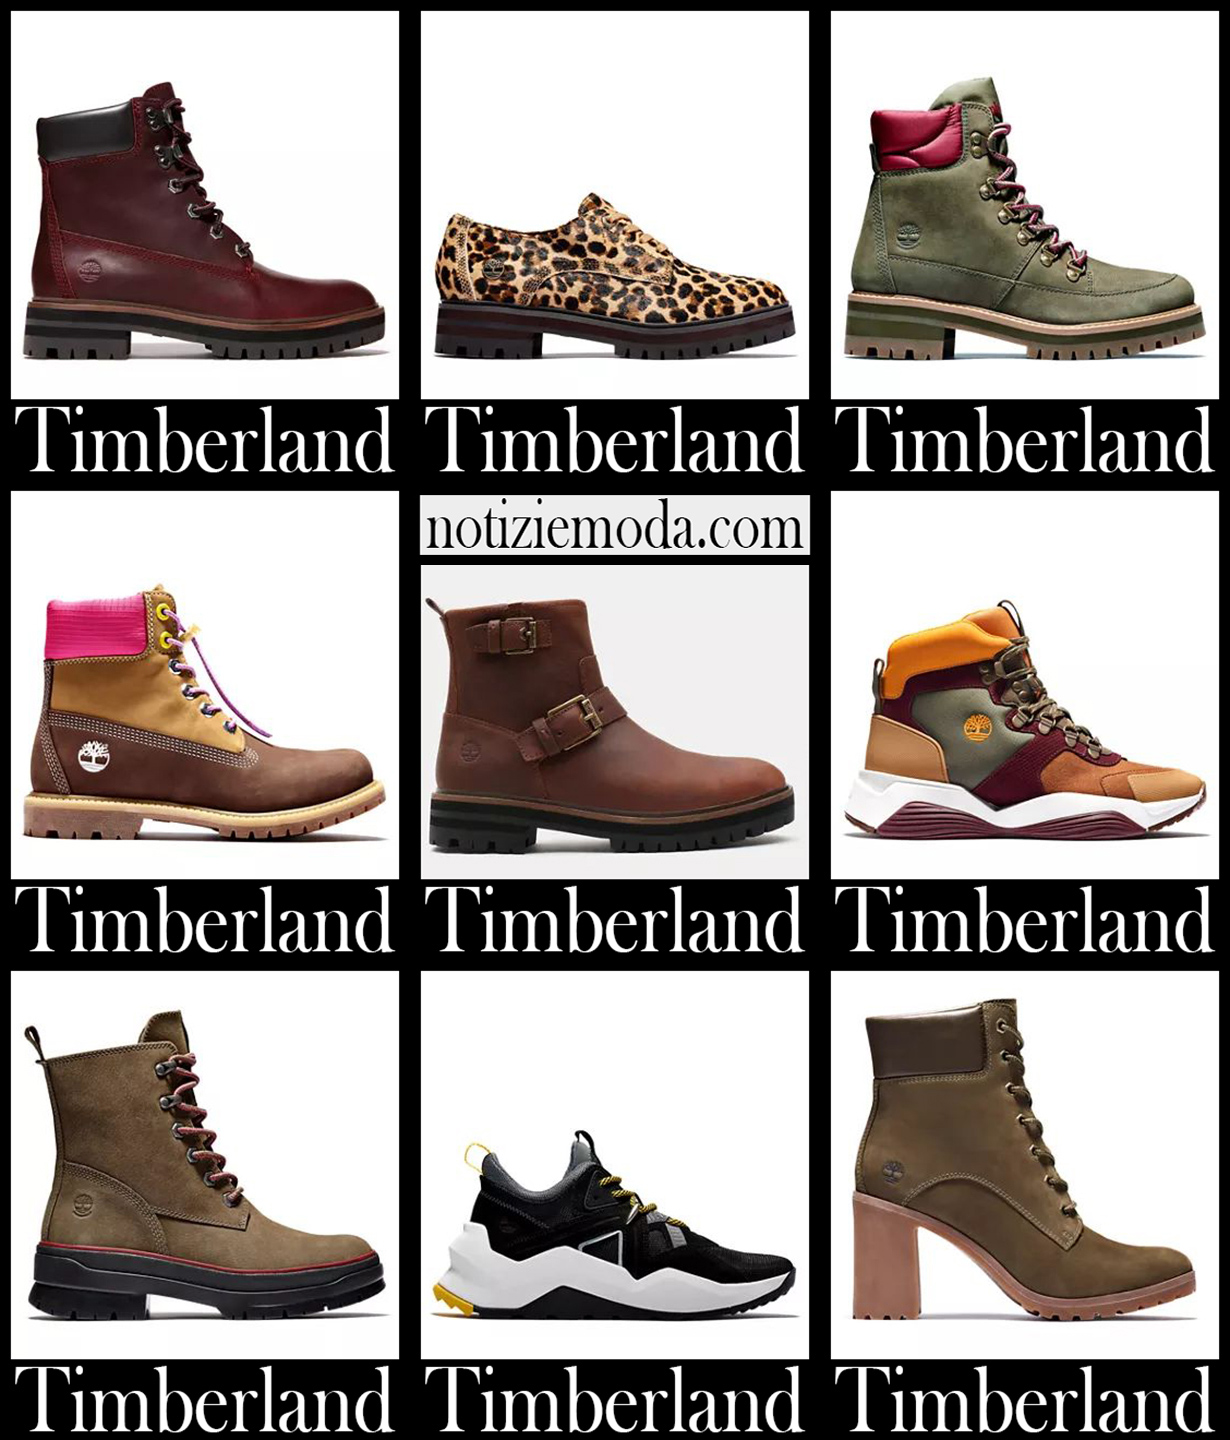 scarpe timberland donne prezzi